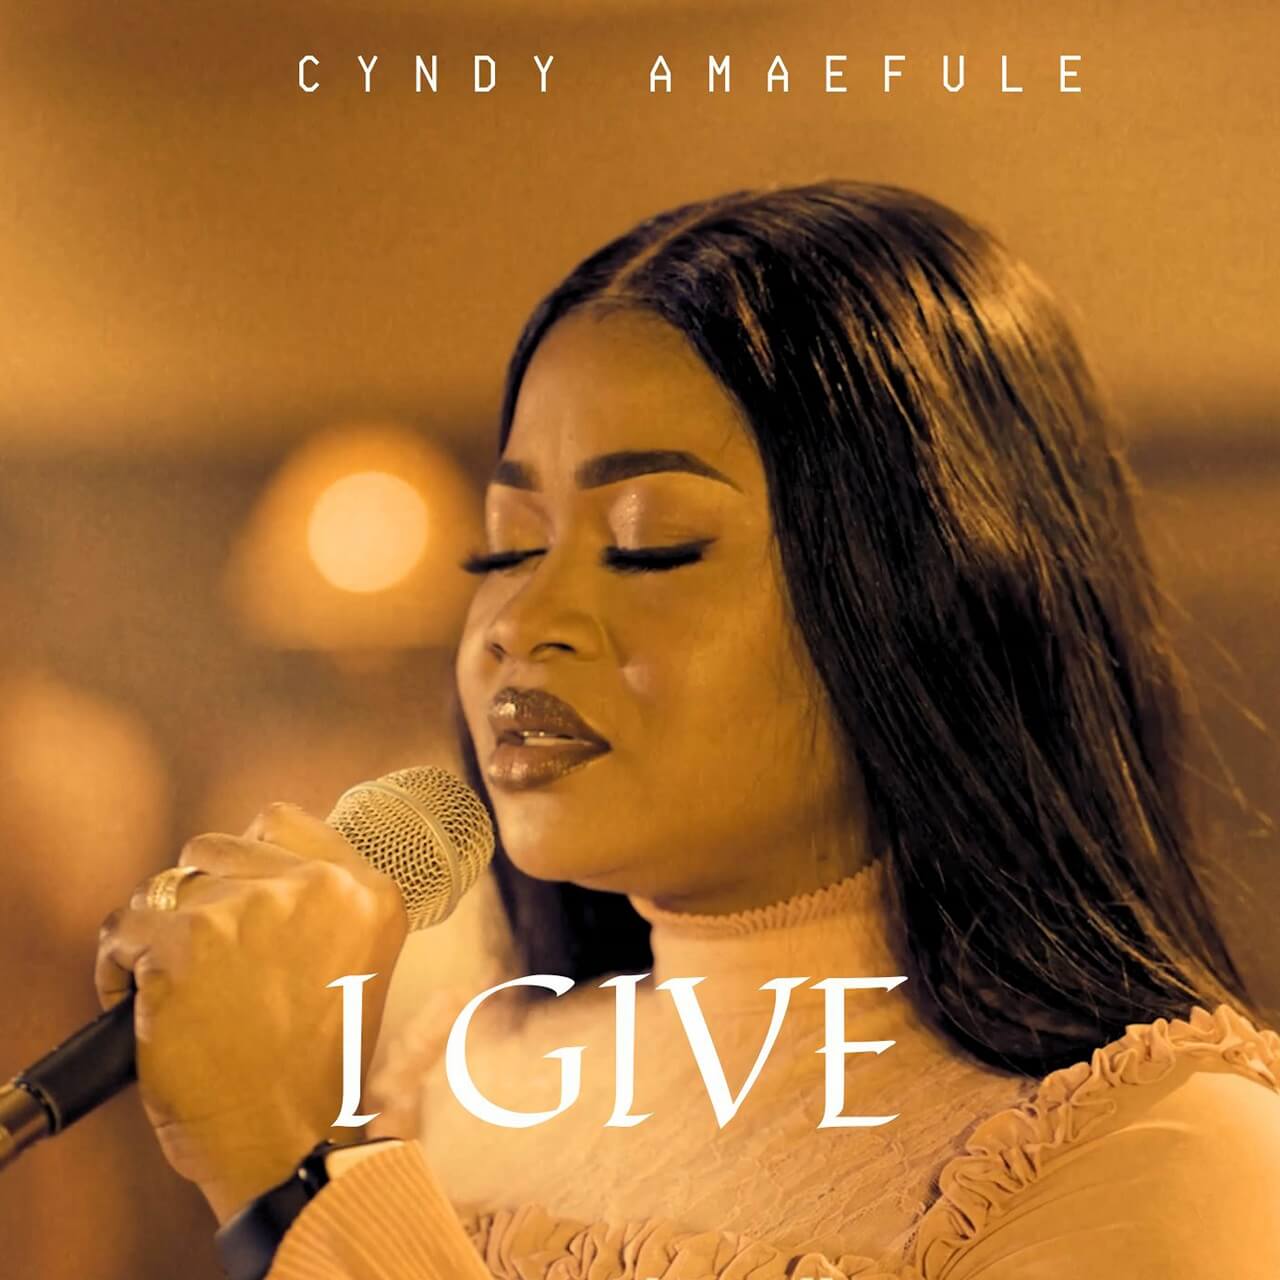 “i-give”-you-everything-–-cyndy-amaefule-declares-in-heartfelt-new-single